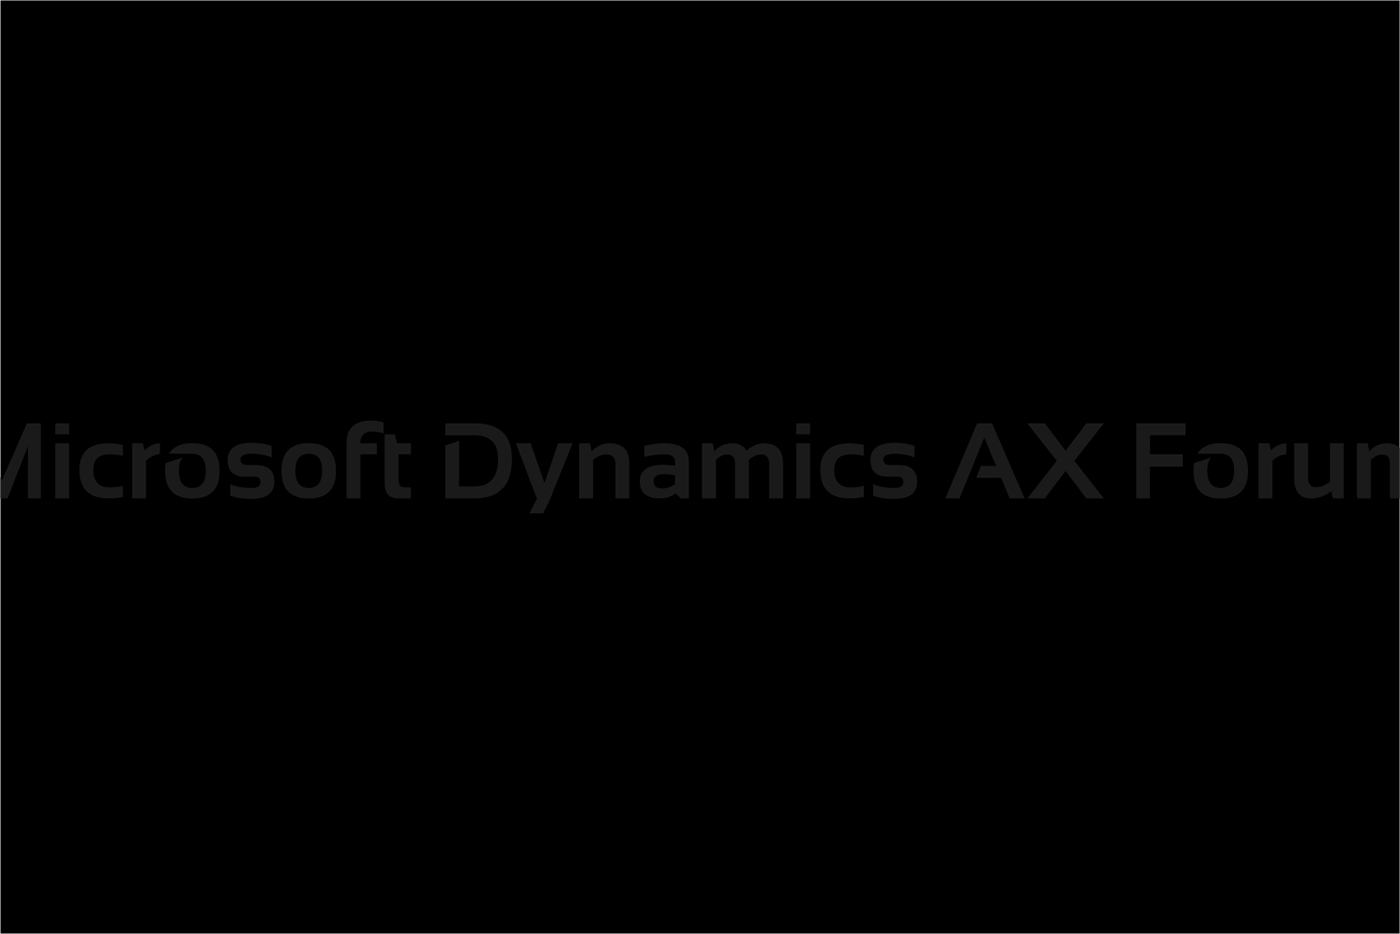 radmirvolk designbyradmirvolk Microsoft DaxForumX business Microsoft Dynamics forum Consyst